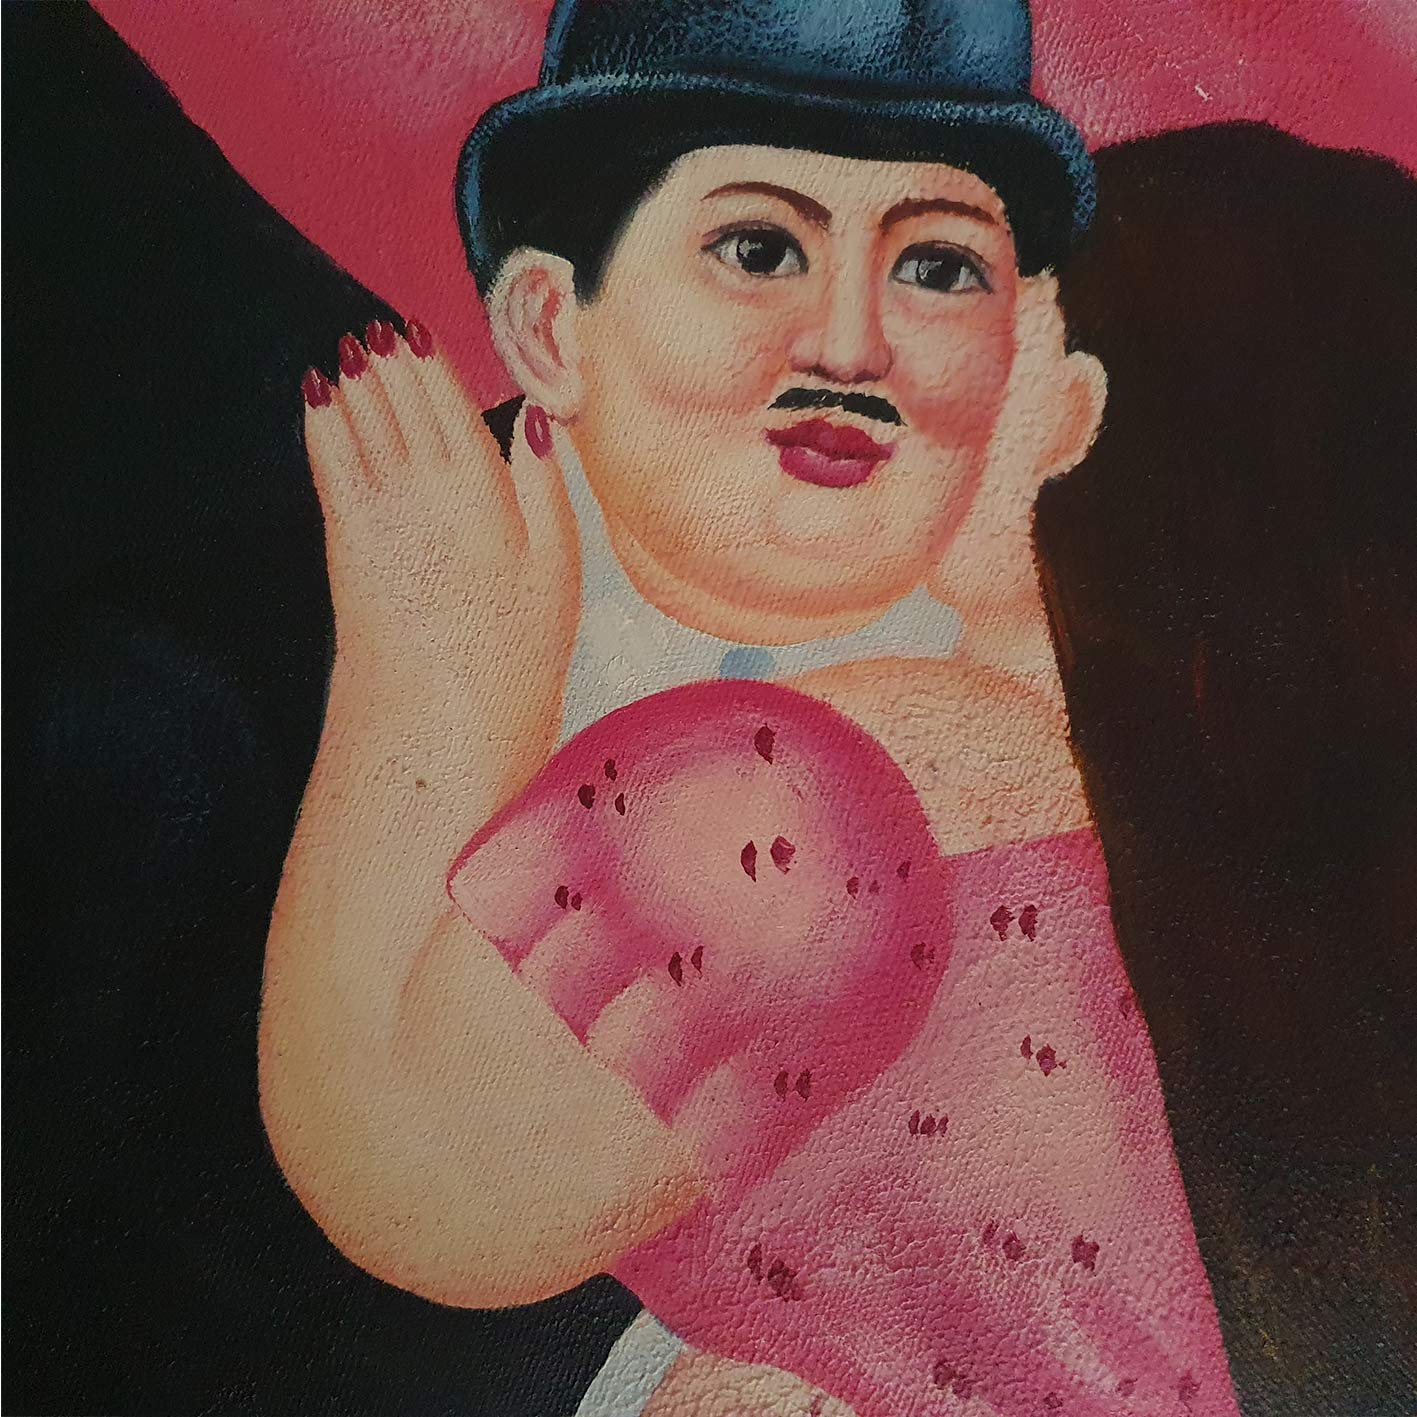 Botero Dance III Gemälde 50x60 cm